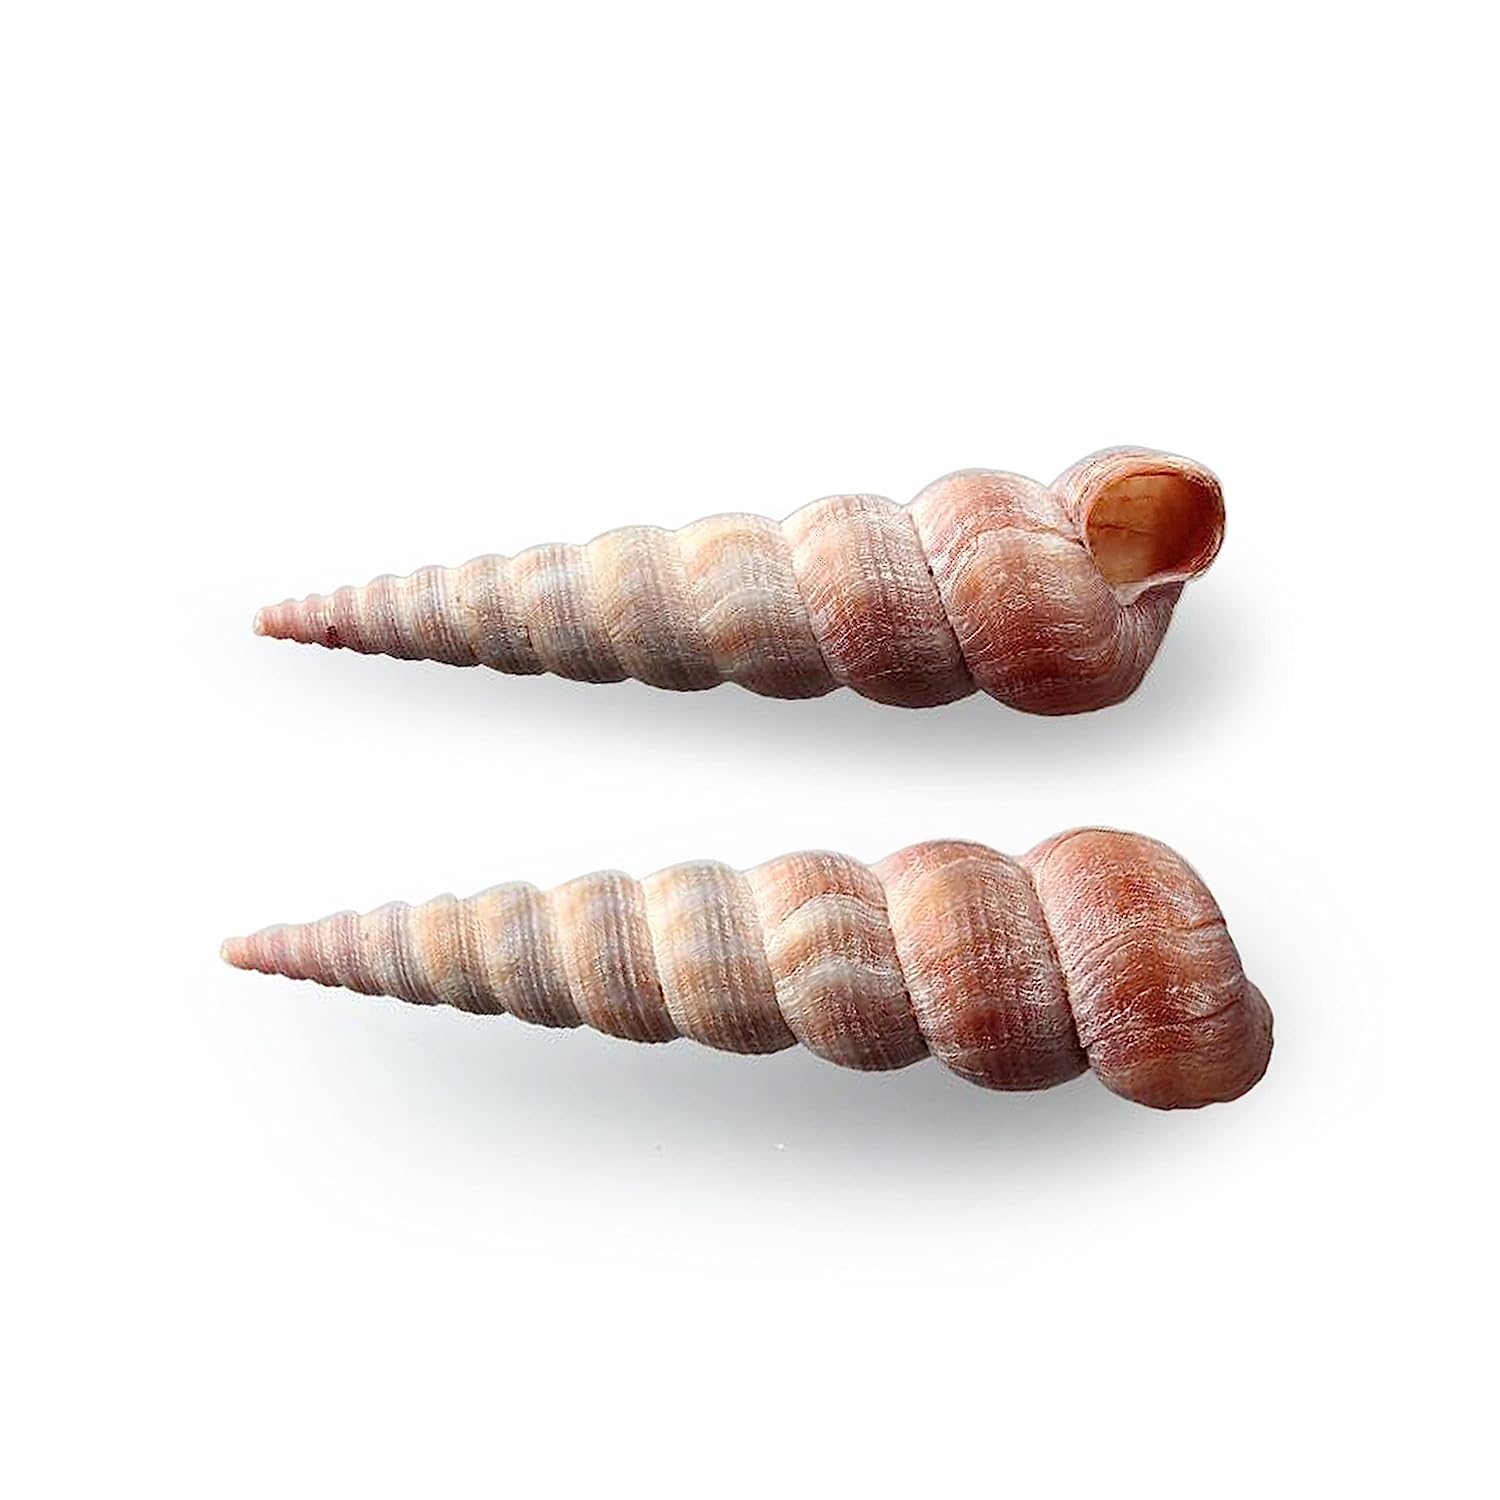 Seashell - Auger Shell - Cinguloterebra Commaculata - Arts and Crafts Making - Gopuram- Pack of 10